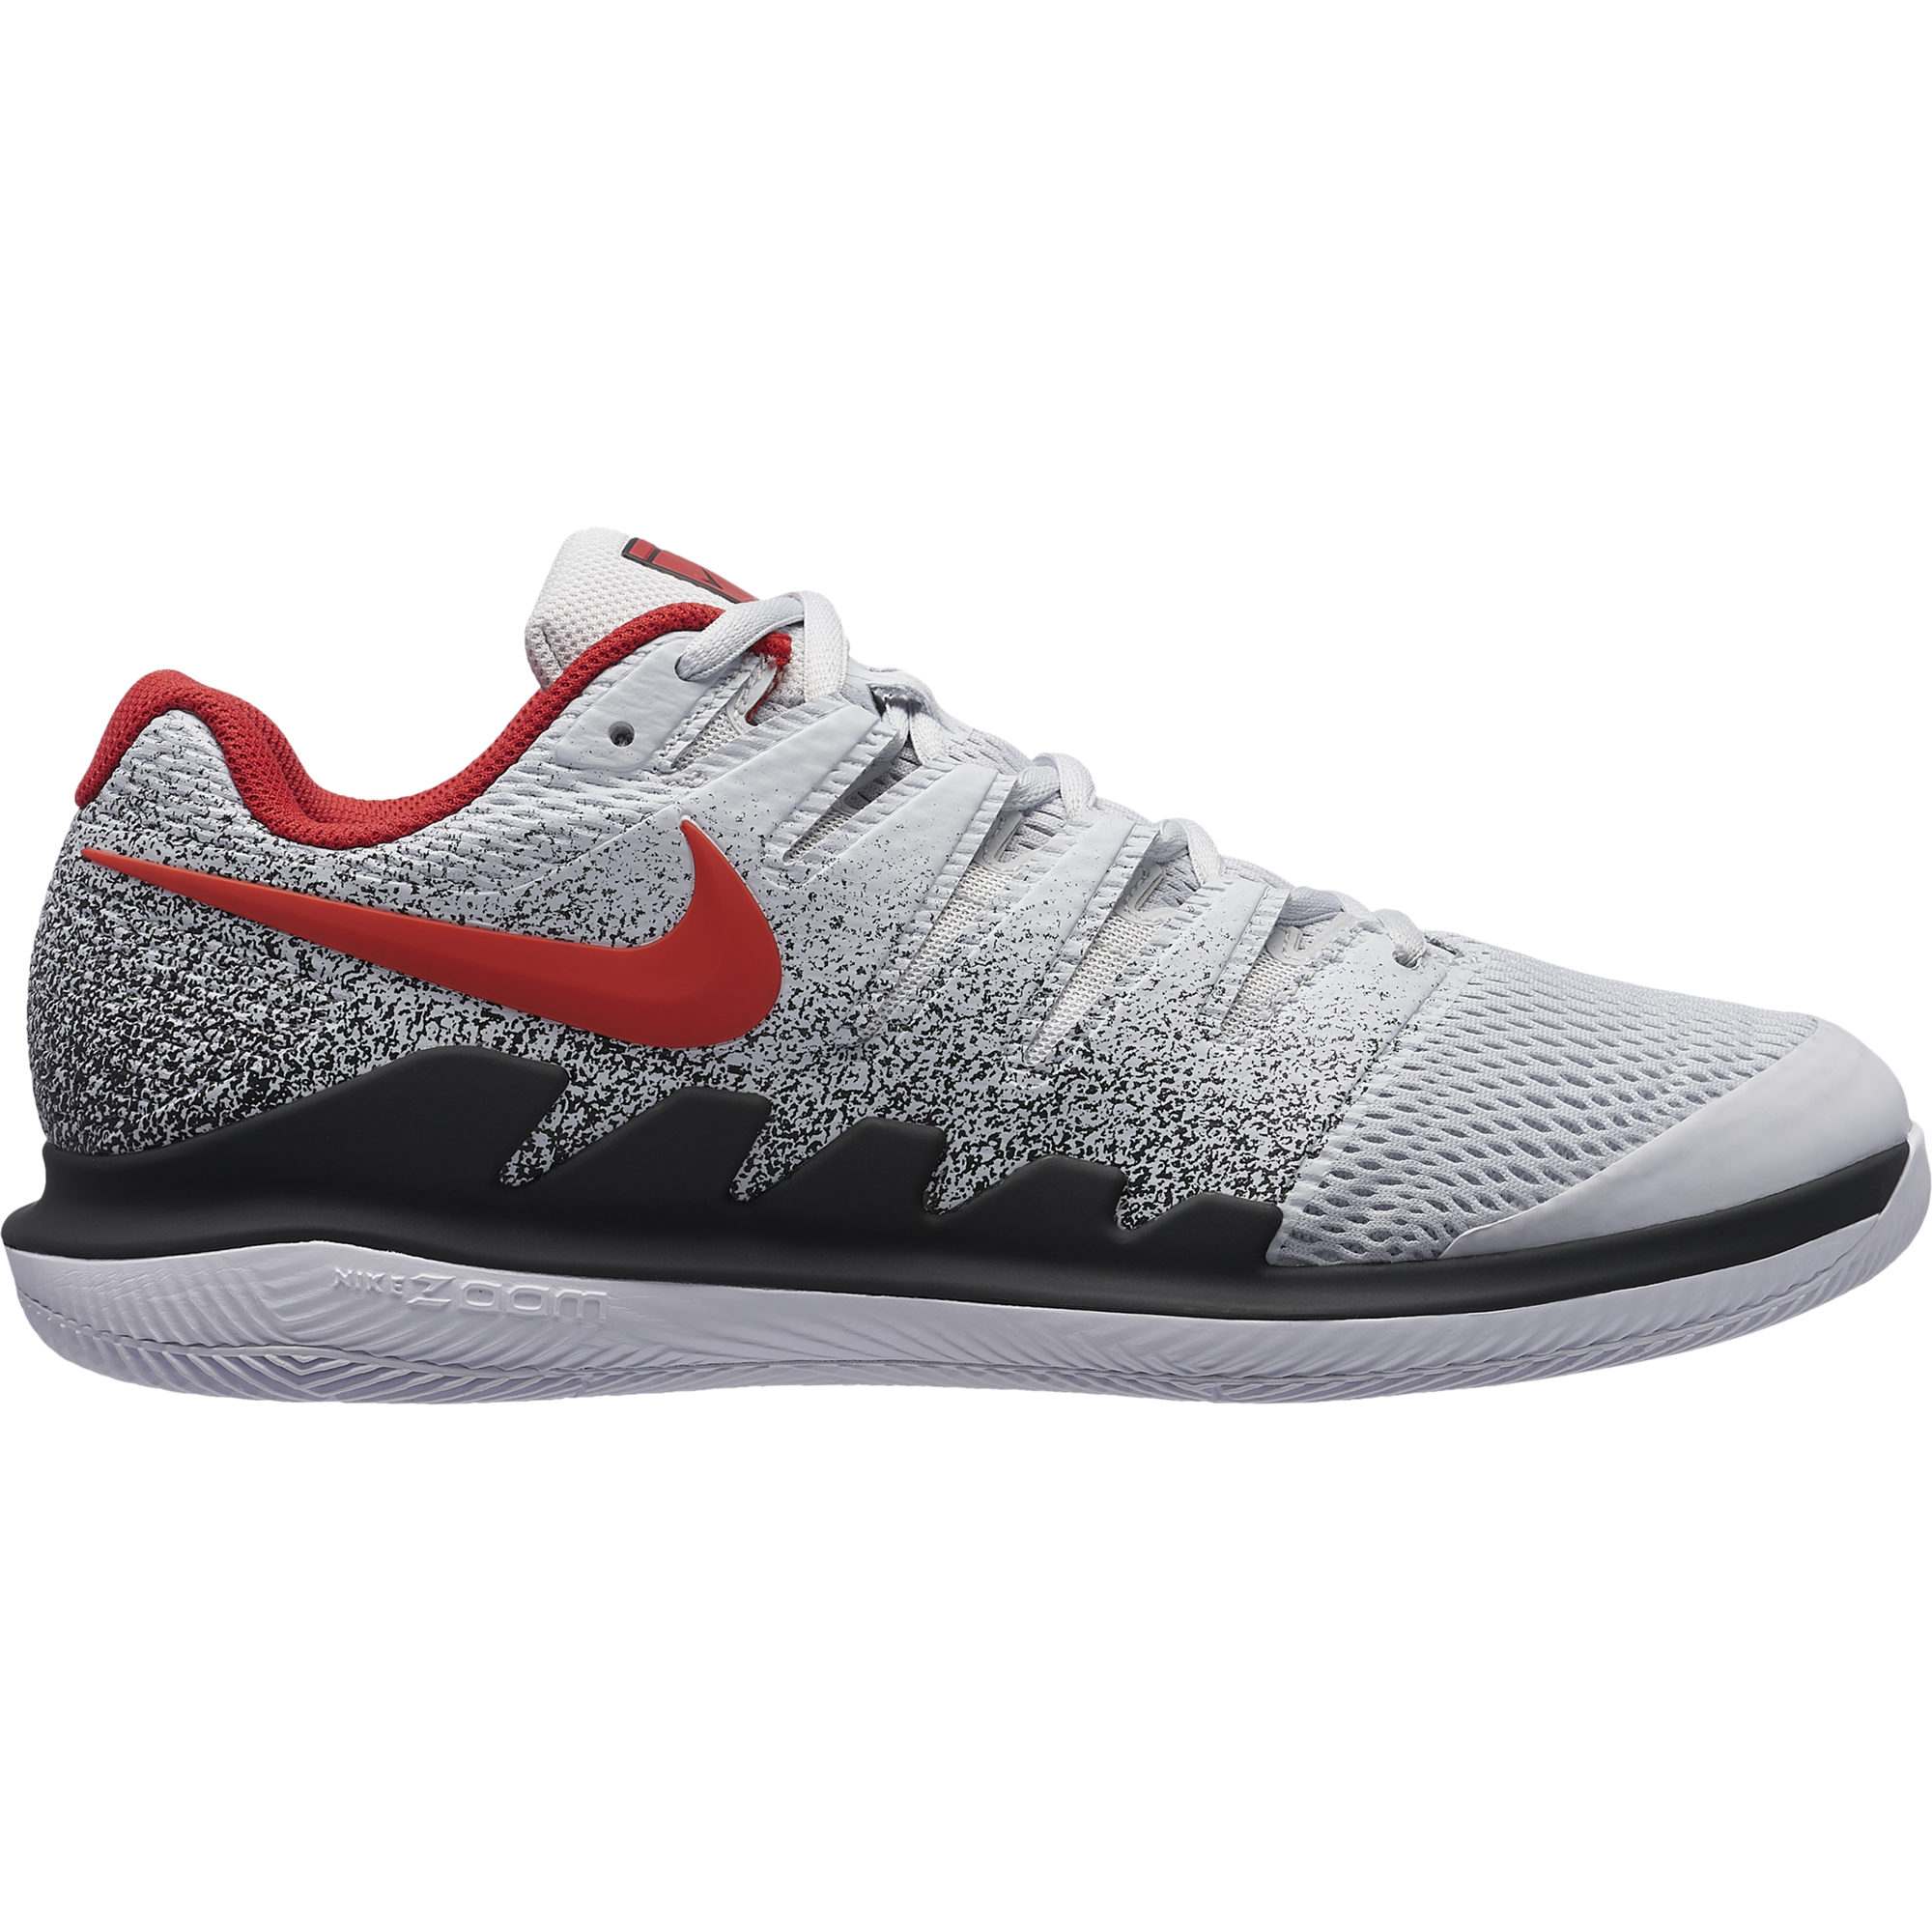 Nike Air Zoom Vapor X Men's Tennis Shoe - Light Grey